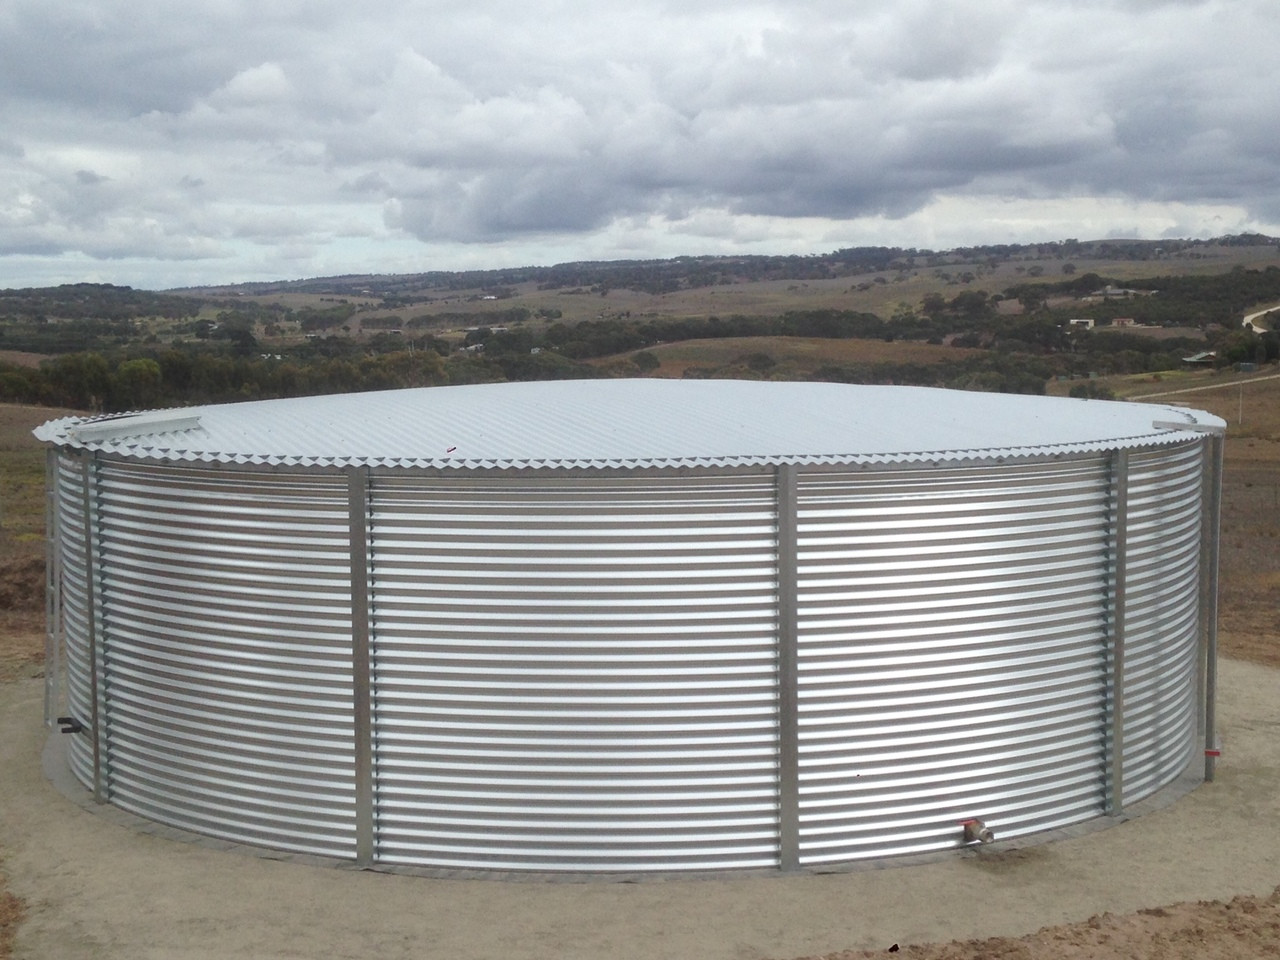 28,000 Gallon Aquamate Water Storage Tank